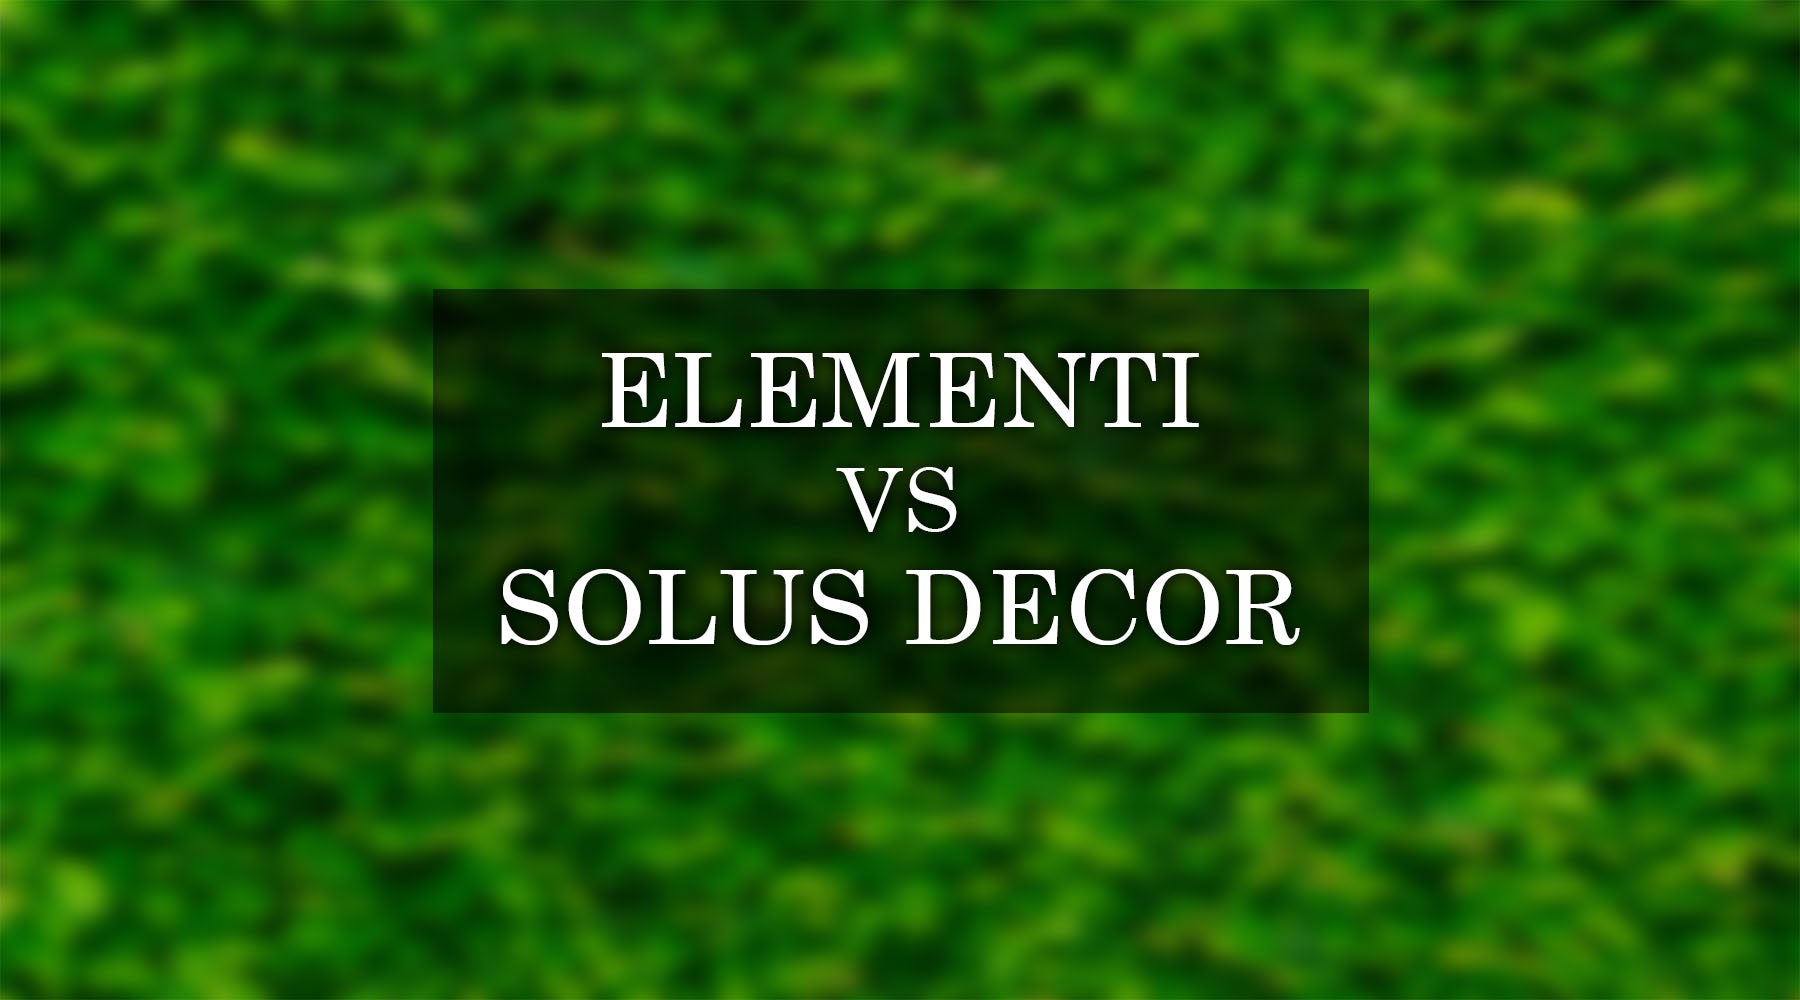 Elementi vs Solus Decor: Comparing High-End Fire Pits